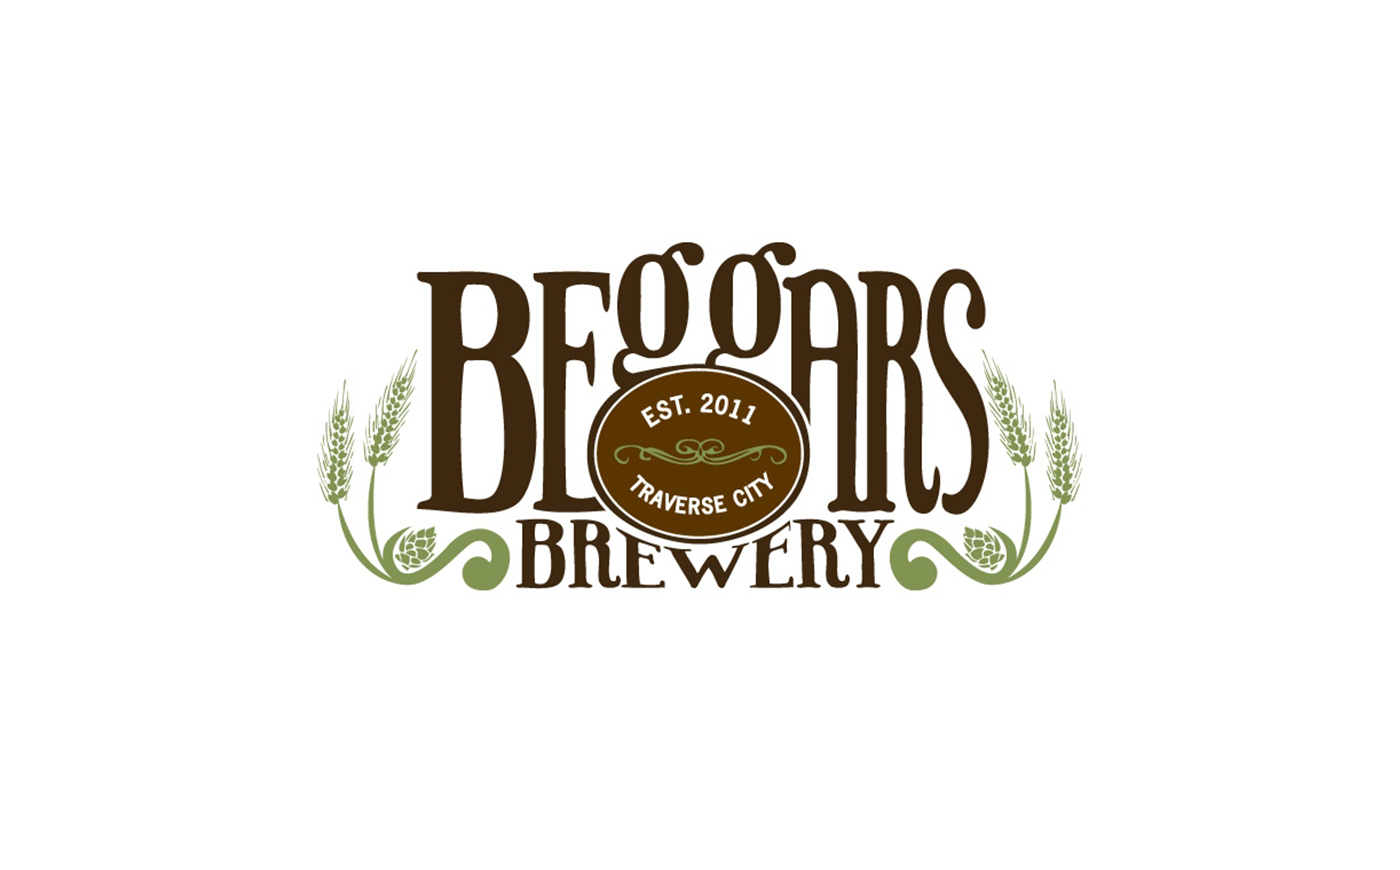 Beggars Brewery